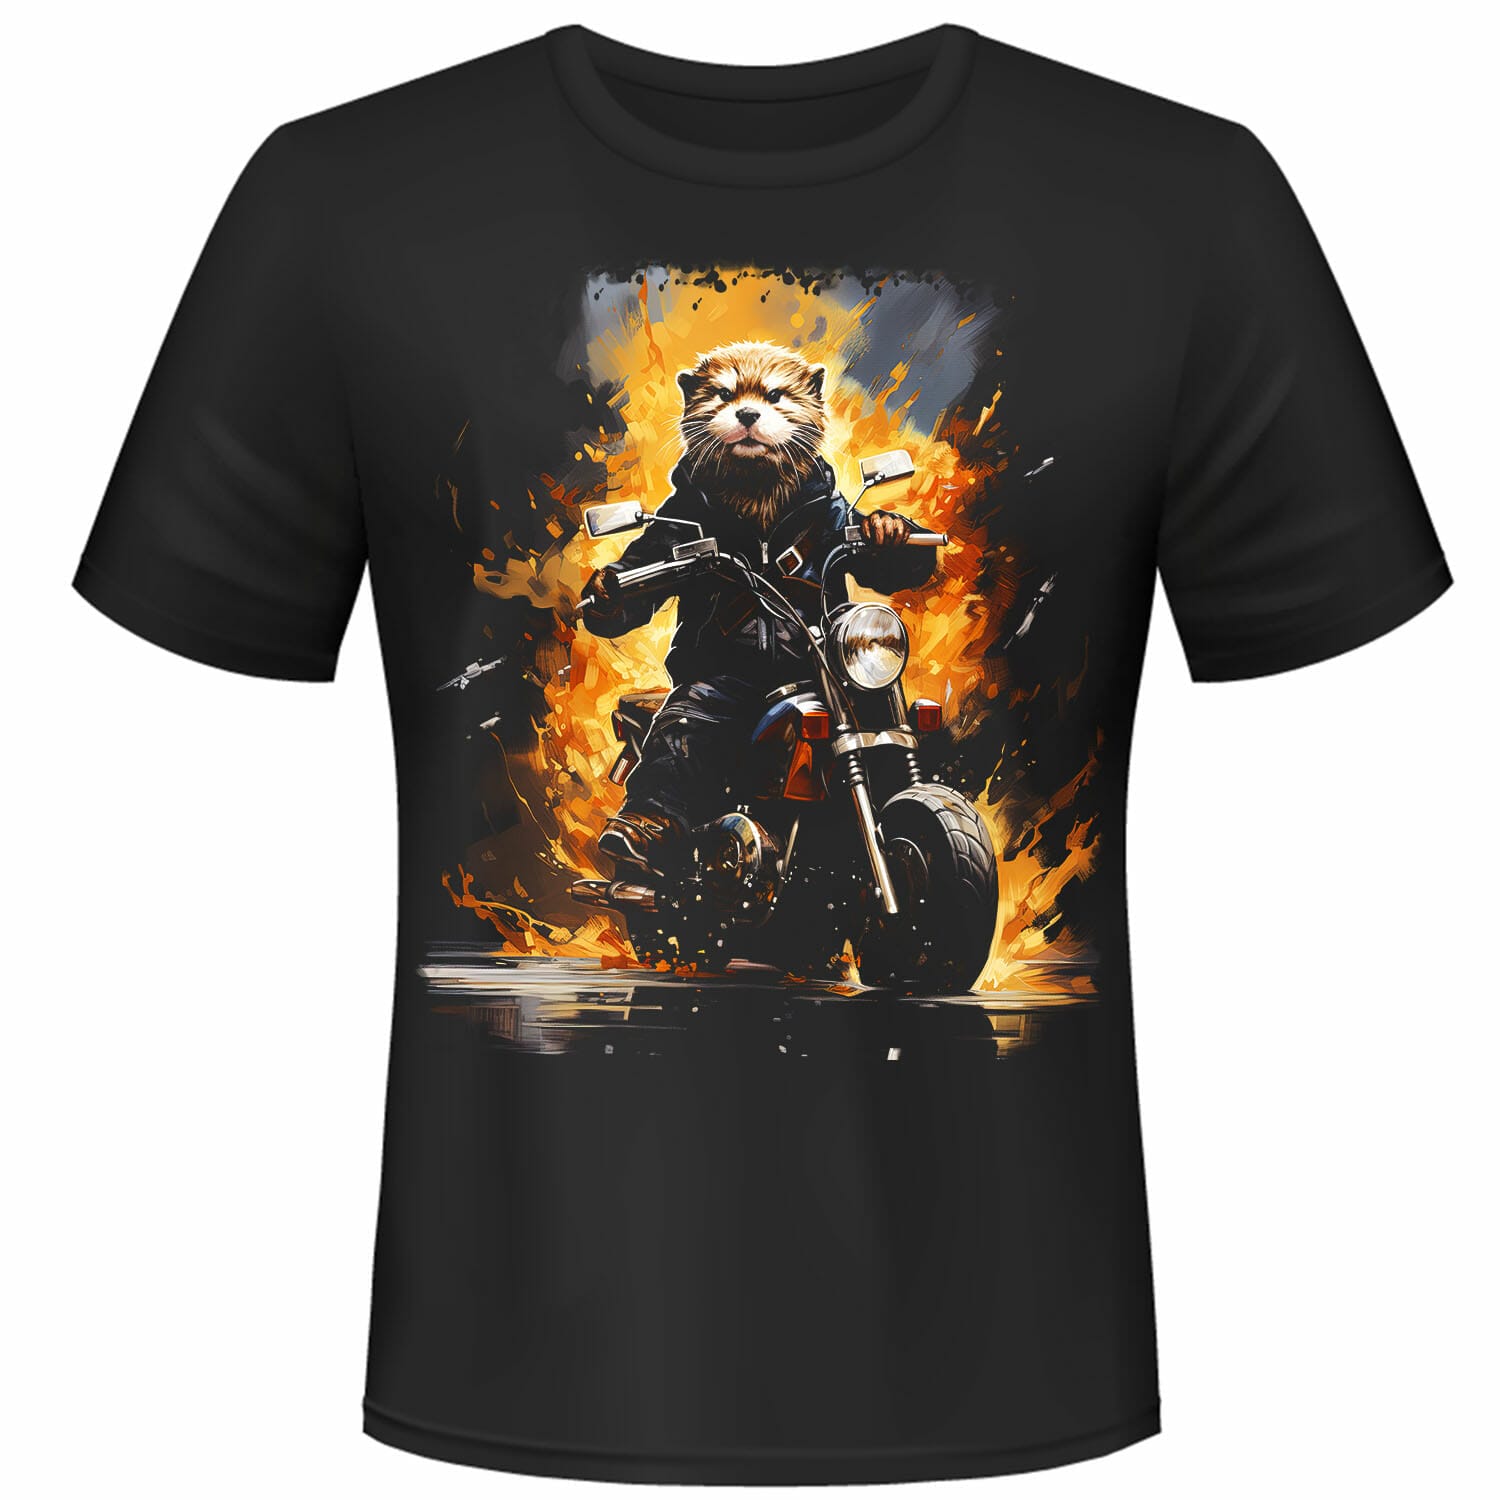 otter riding a bike tshirt design